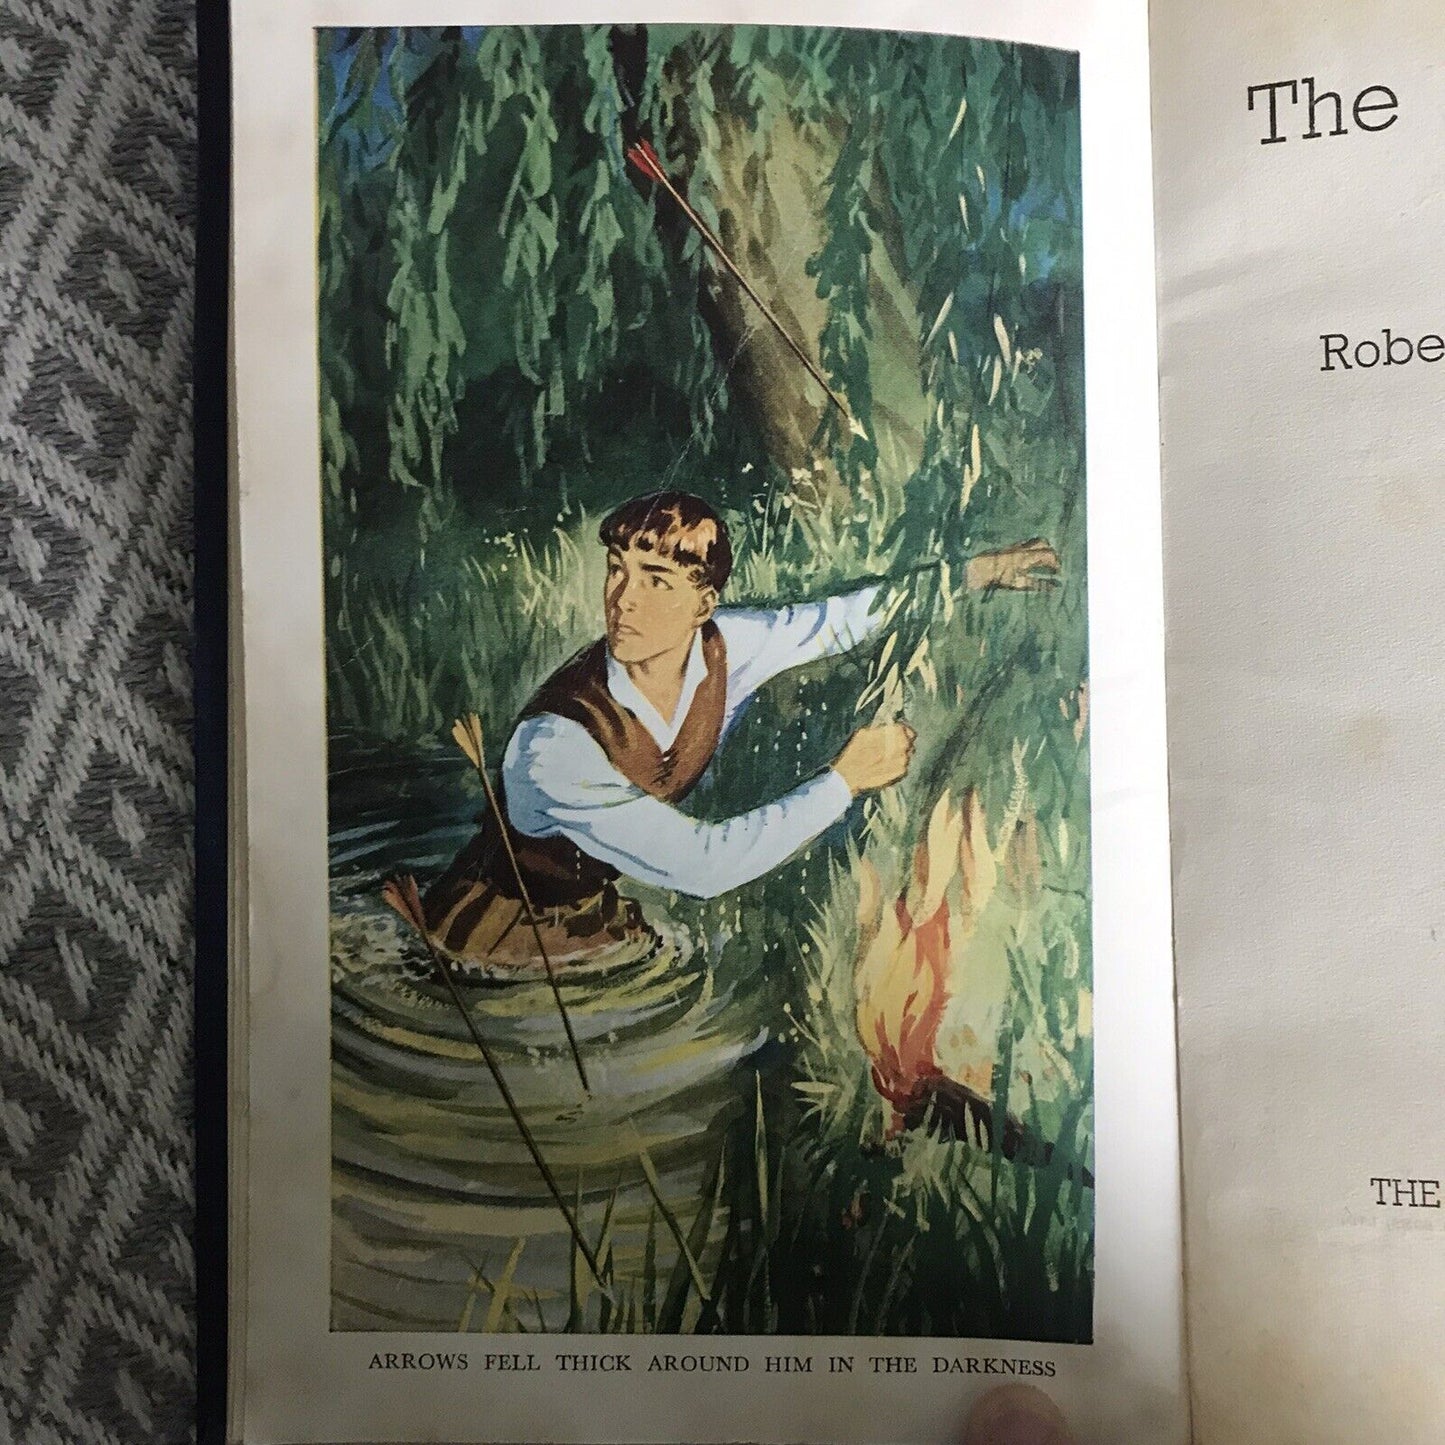 1954 The Black Arrow – Robert Louis Stevenson (Thames Publishing)